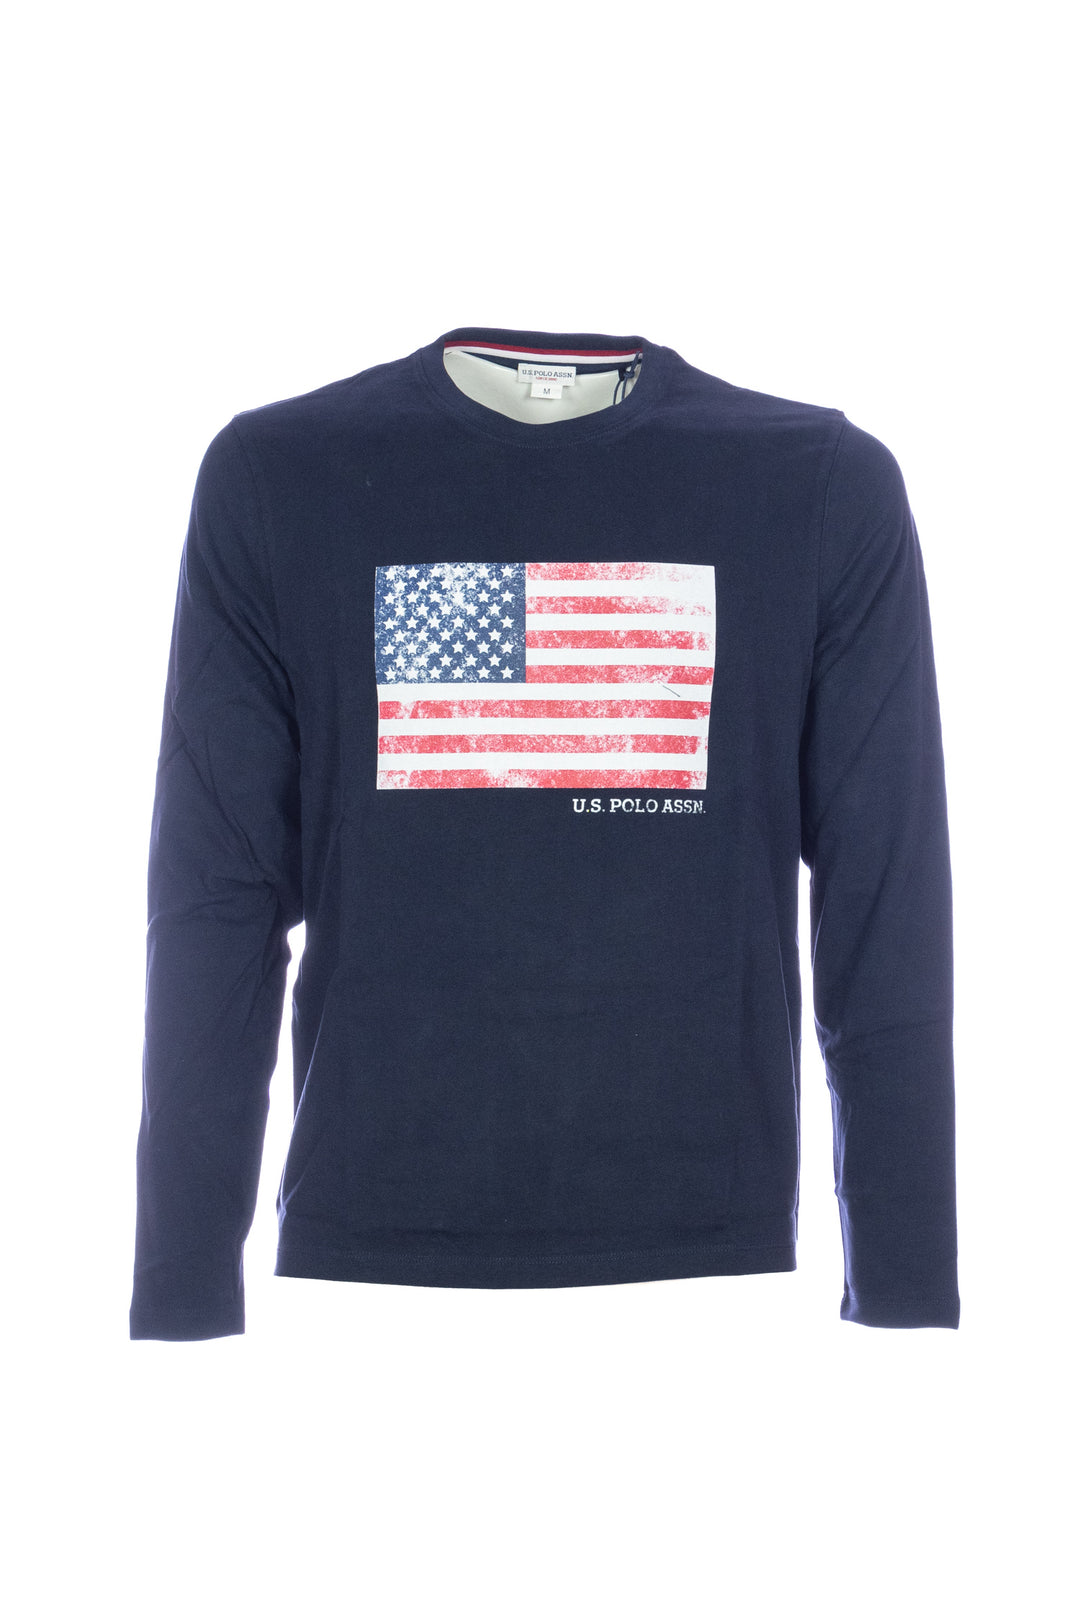 U.S. POLO ASSN. T-shirt blu navy a maniche lunghe con bandiera americana - Mancinelli 1954